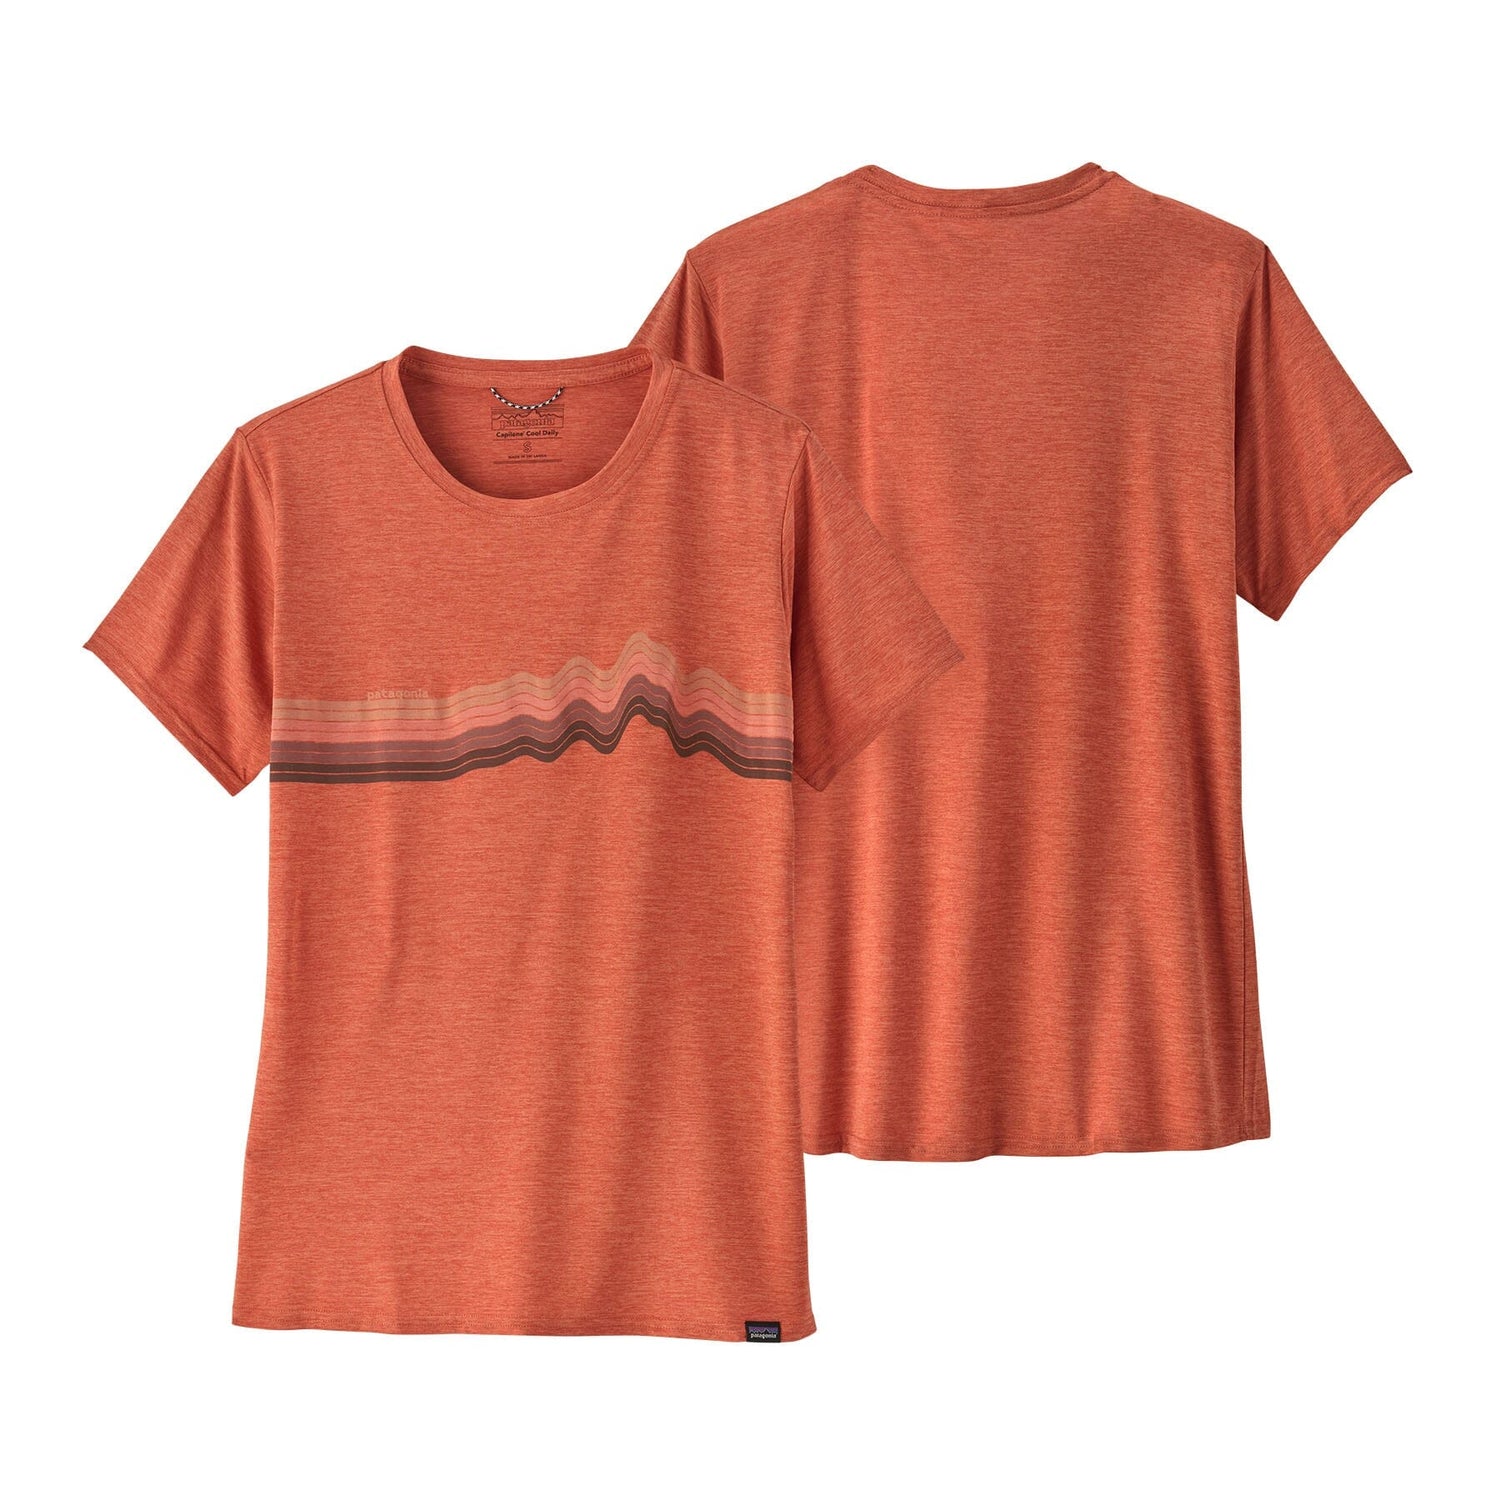 Patagonia W's Capilene® Cool Daily Graphic T-Shirt - Recycled Polyester Ridge Rise Stripe: Quartz Coral X-Dye Shirt